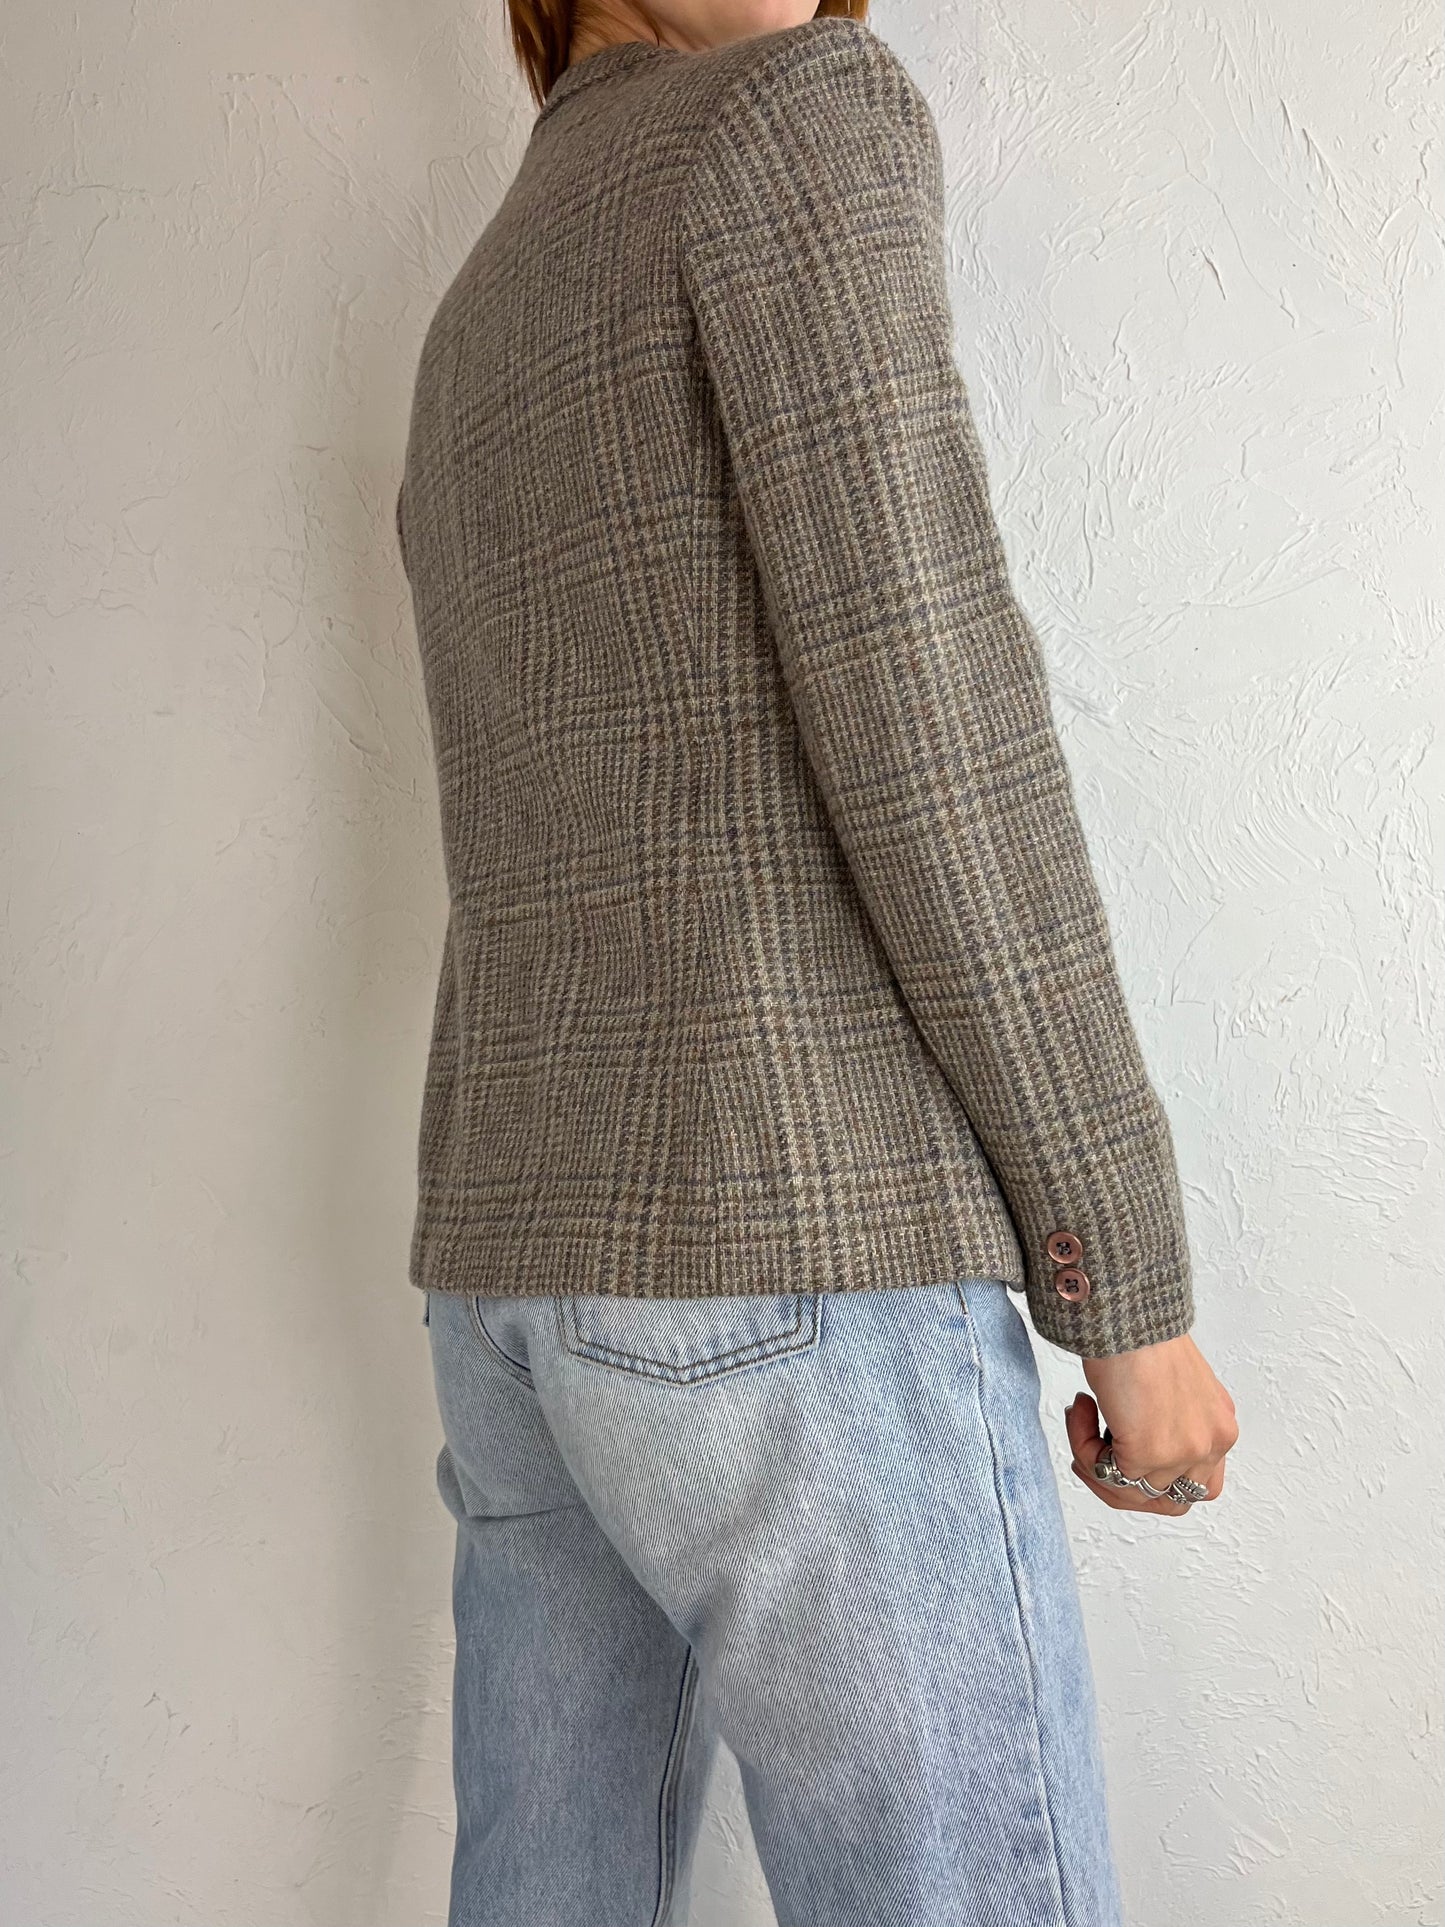 70s 80s 'Emotions' Union Made Wool Blazer Jacket / Small